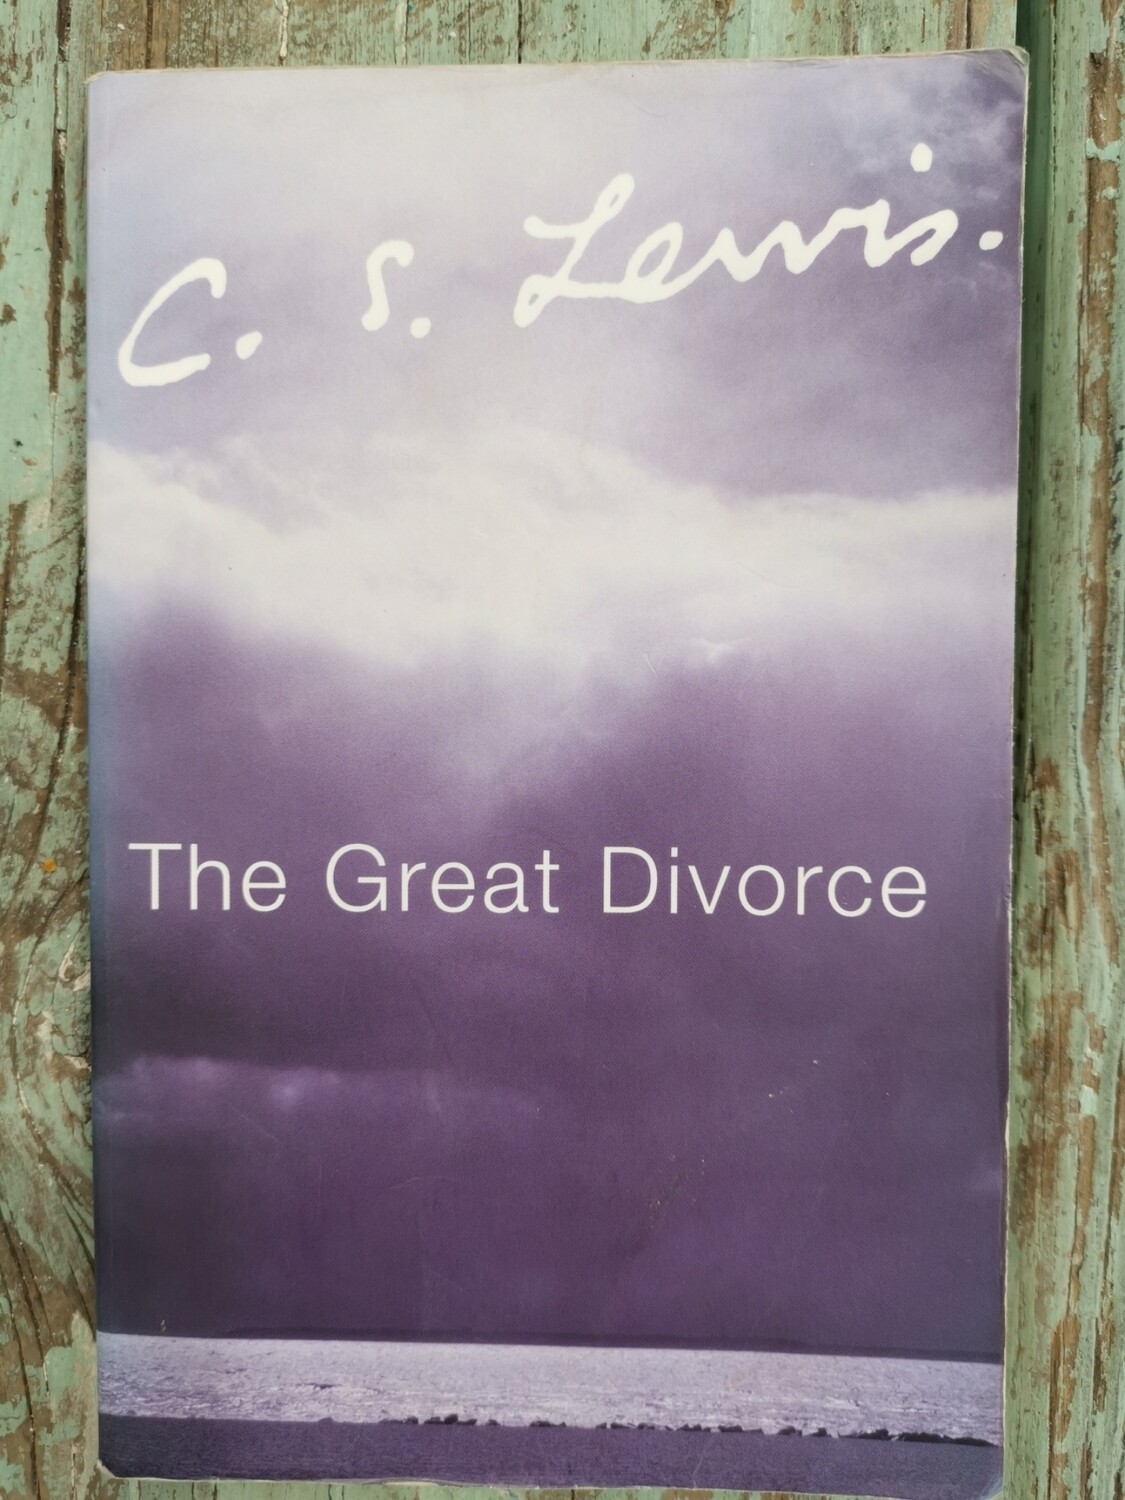 The Great divorce, C S Lewis